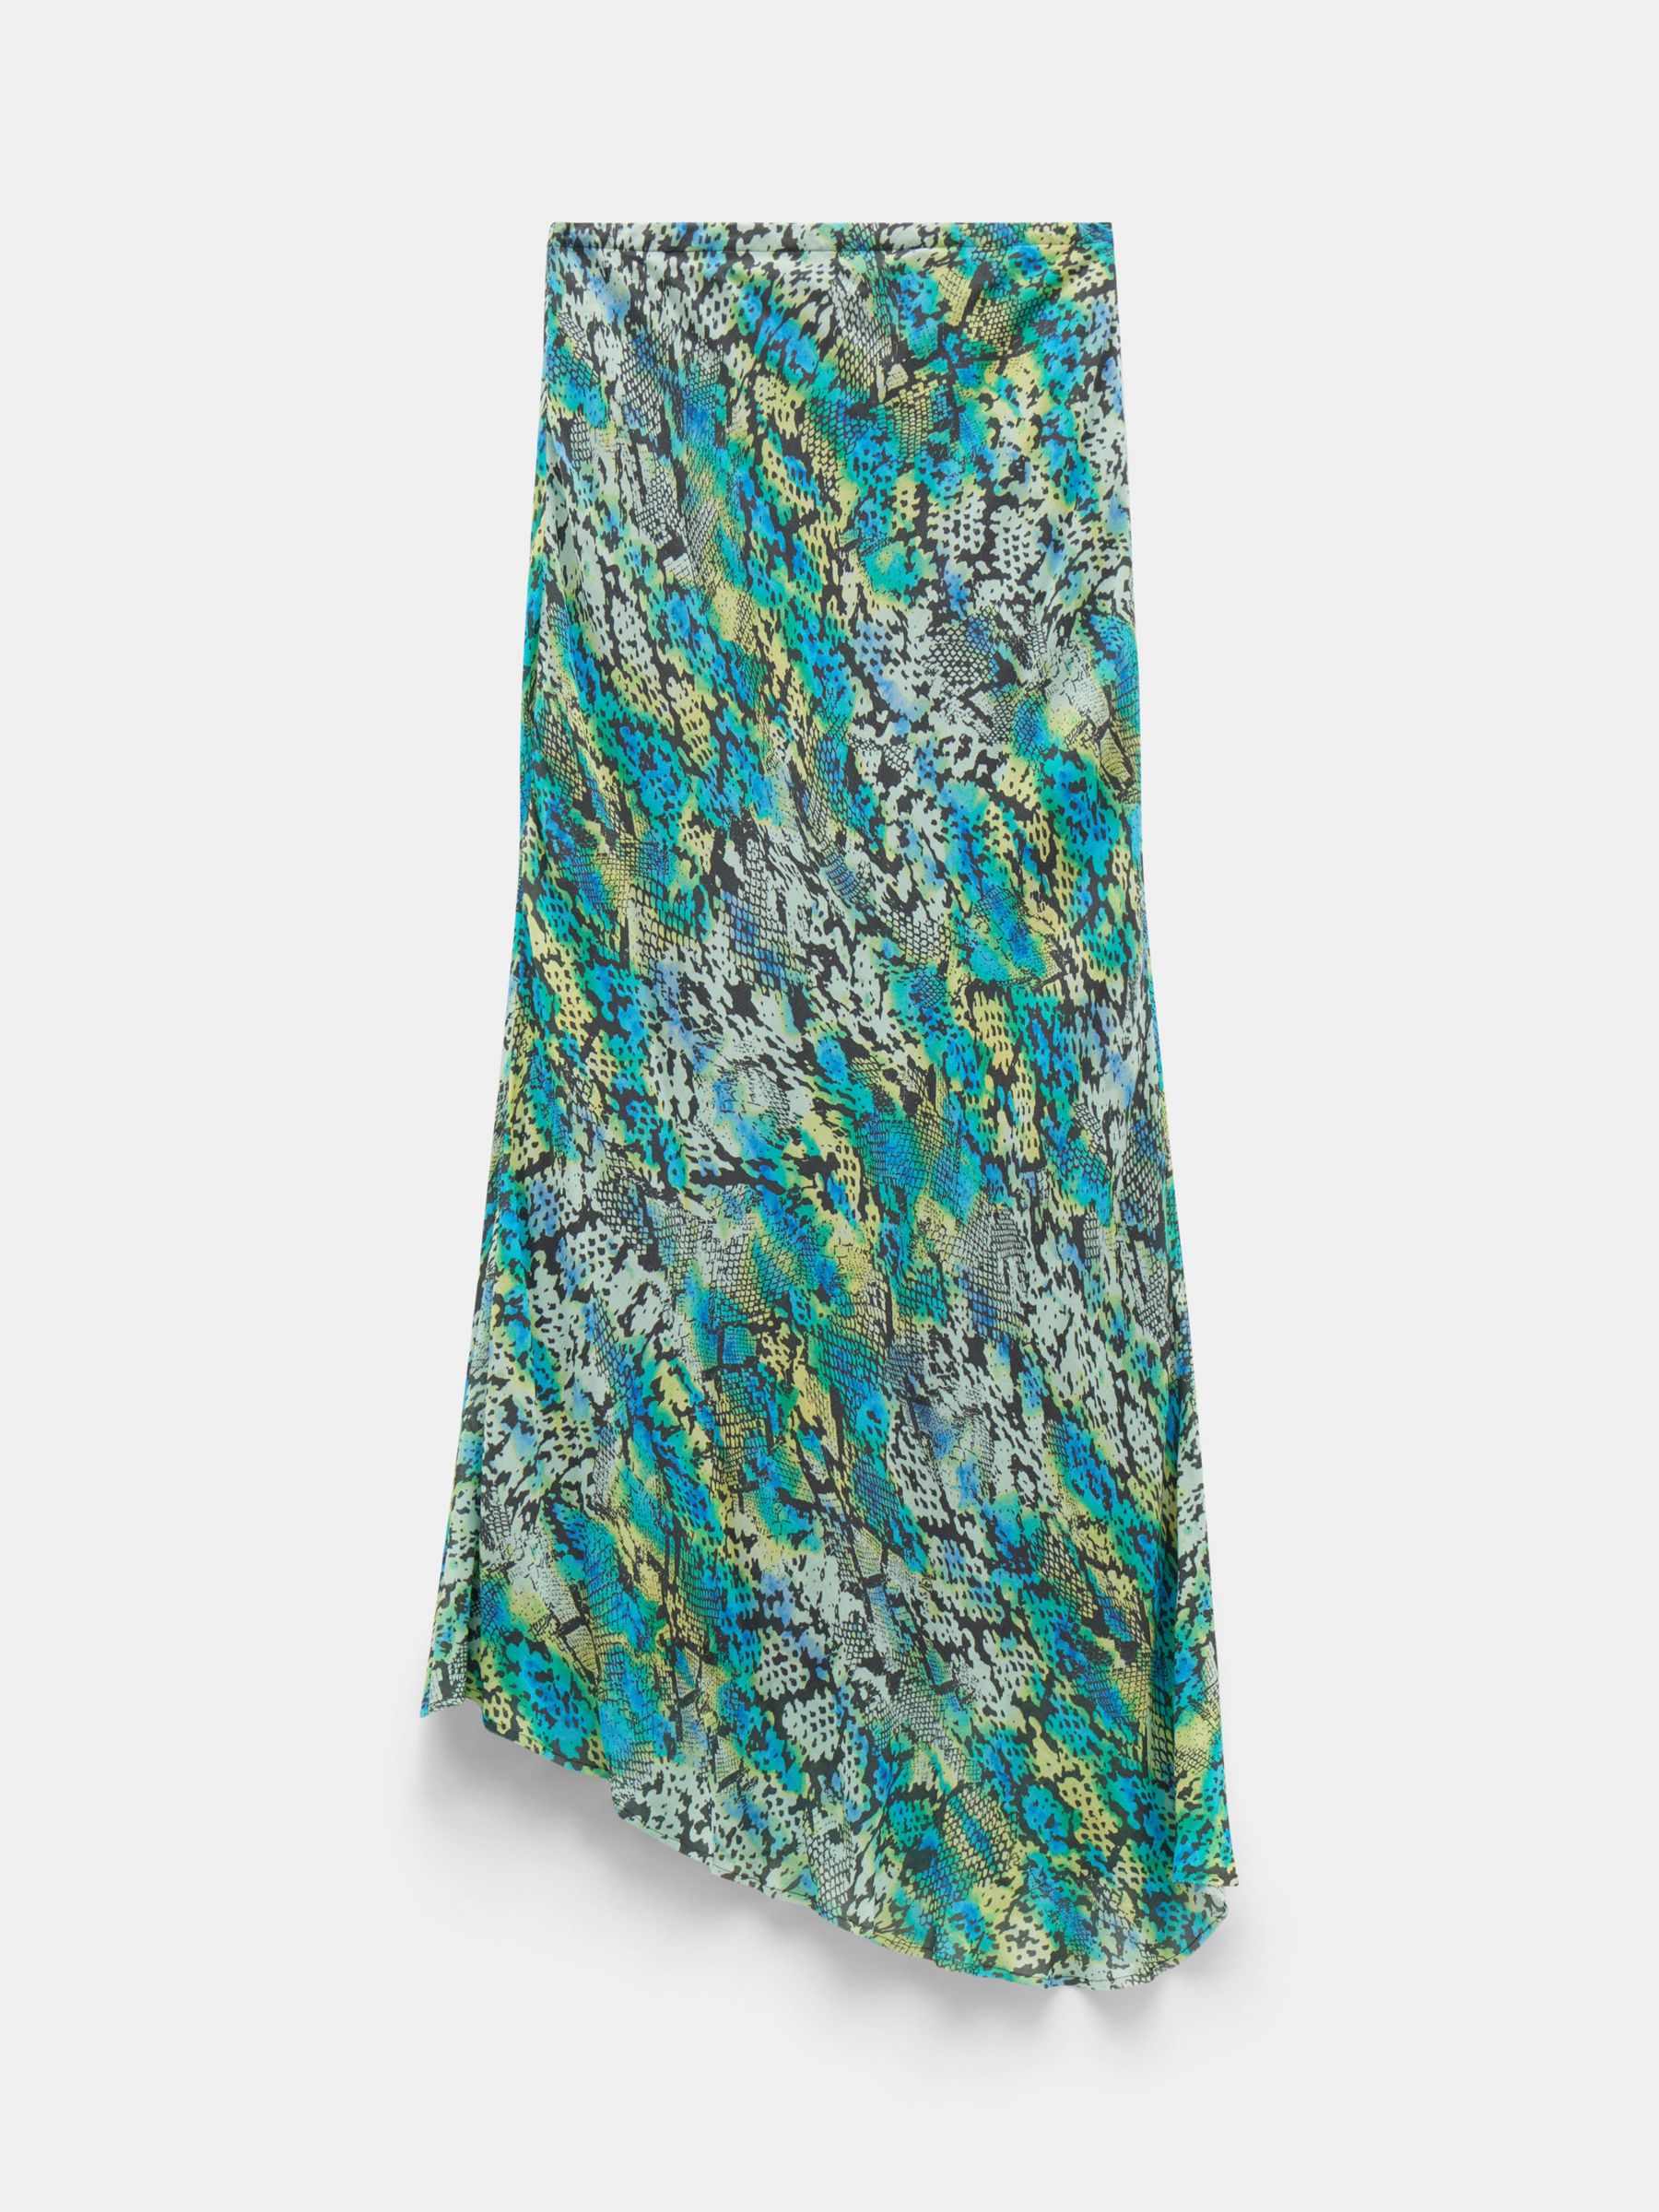 HUSH Hallie Tie Dye Snake Print Midi Skirt, Multi, 14